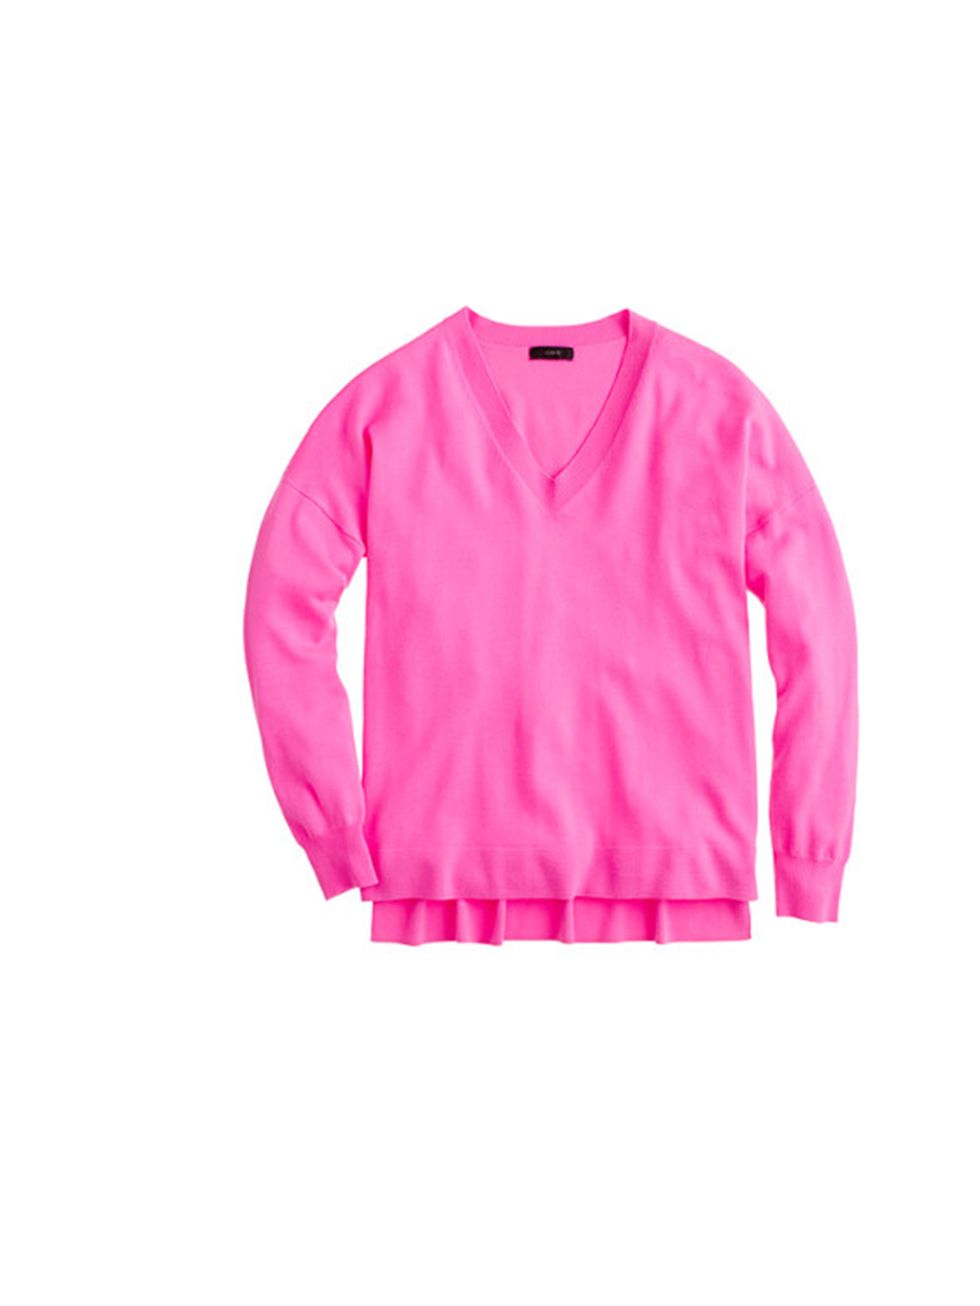 <p>J. Crew pink neon merino wool sweater, £73.20</p><p><a href="http://shopping.elleuk.com/browse?fts=j+crew+merino+neon">BUY NOW</a></p>